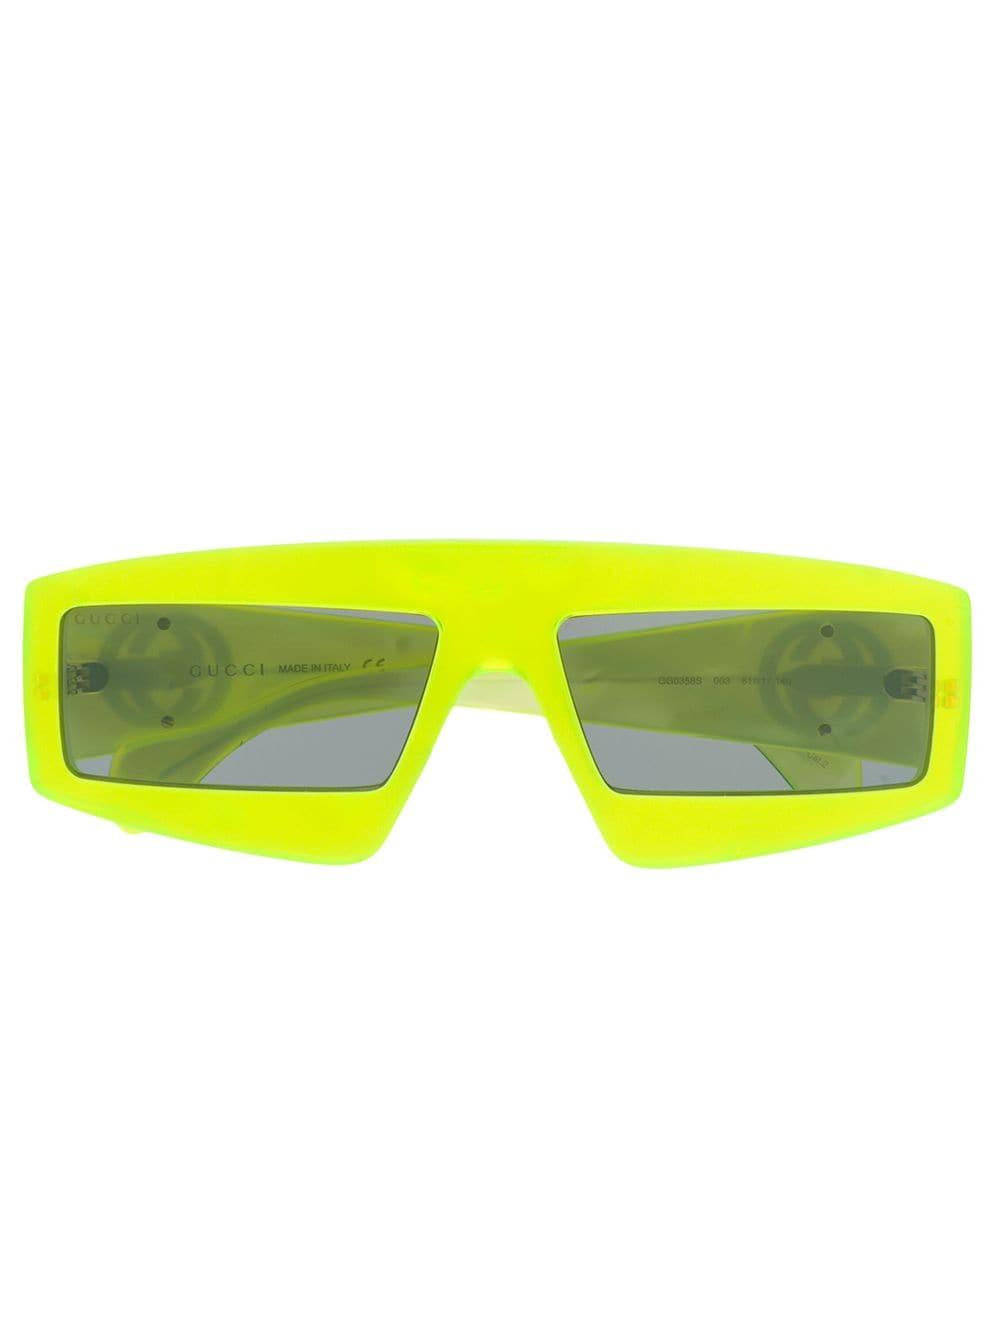 Gucci Neon Sunglasses in Yellow | Lyst